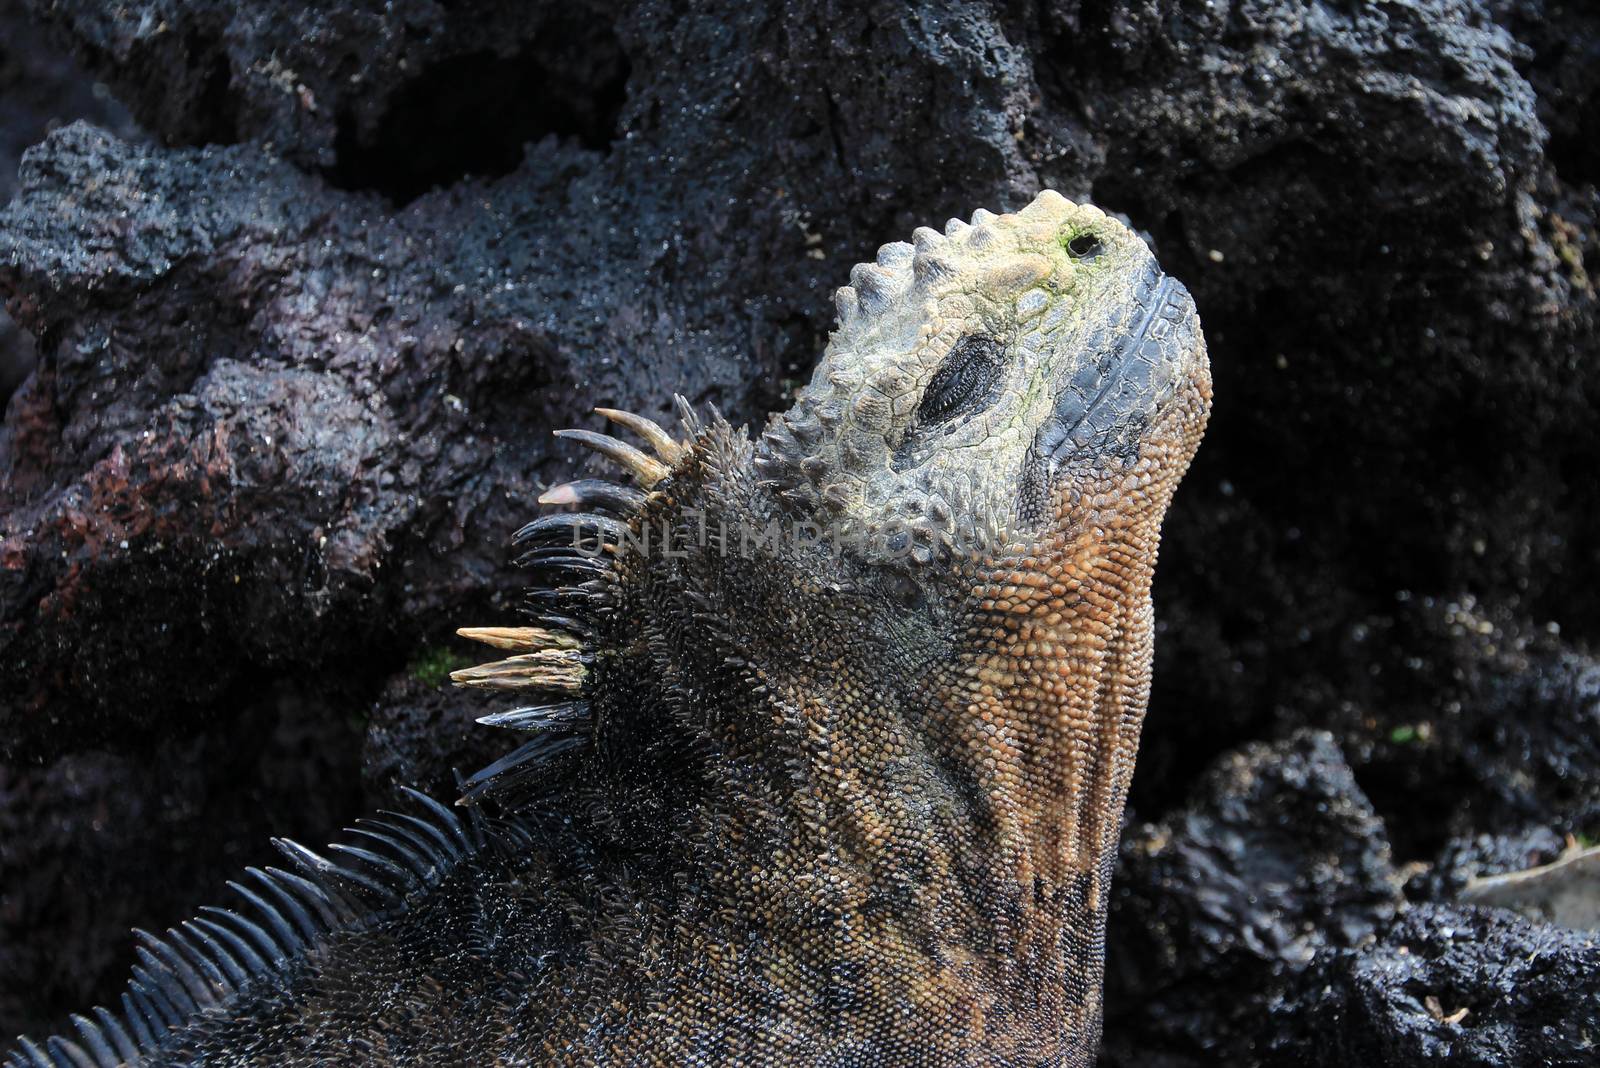 Galapagos Marine Iguana head by cicloco